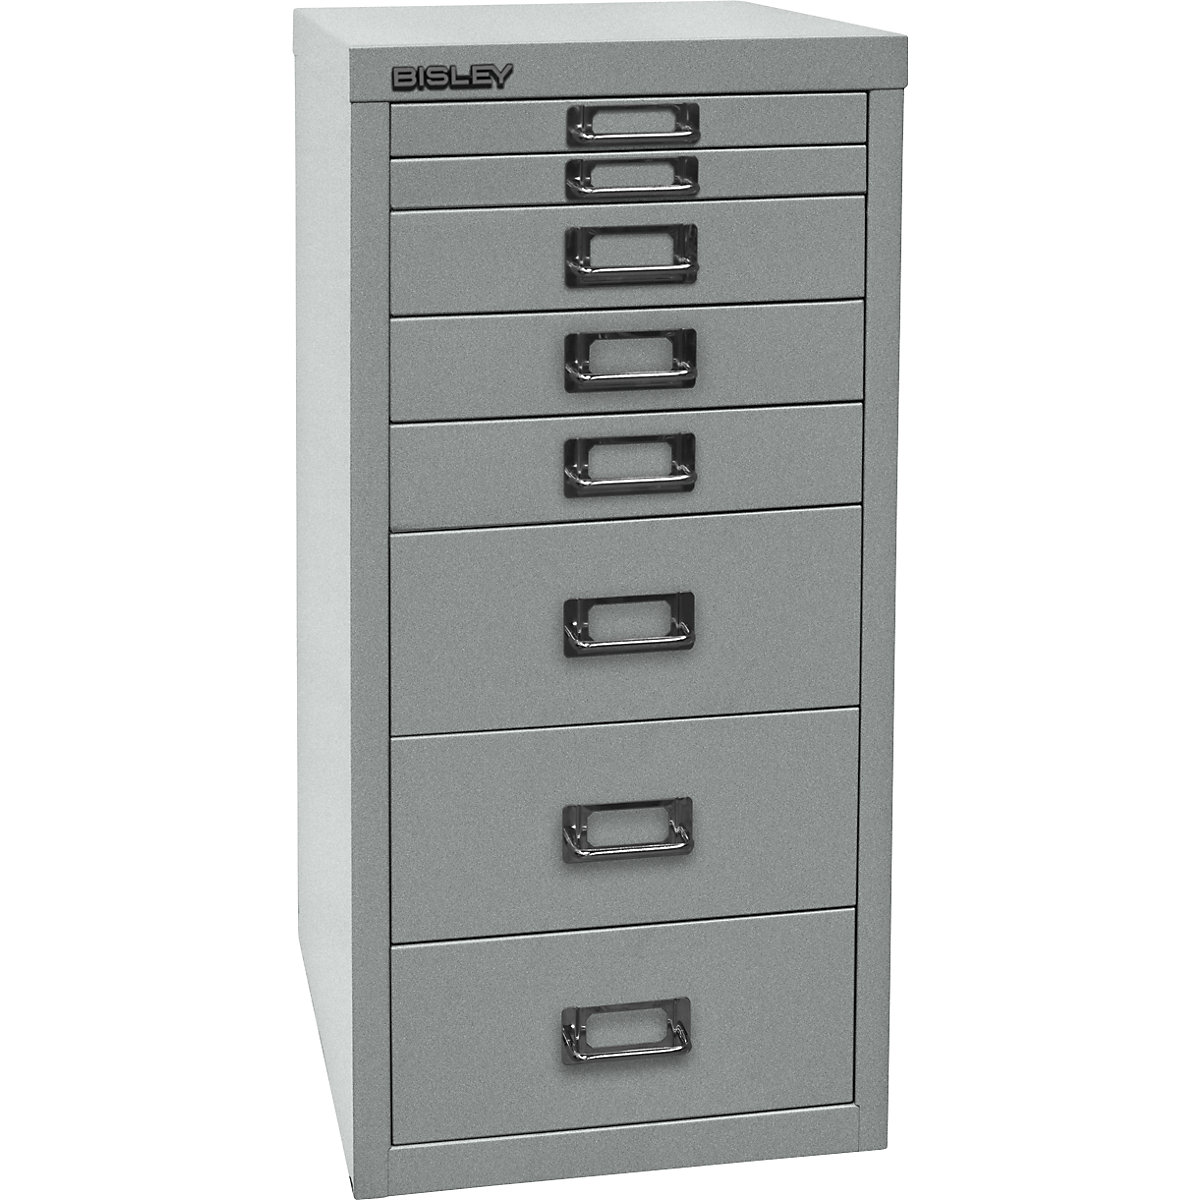 MultiDrawer™ 29 series – BISLEY, A4, 8 drawers, silver-11